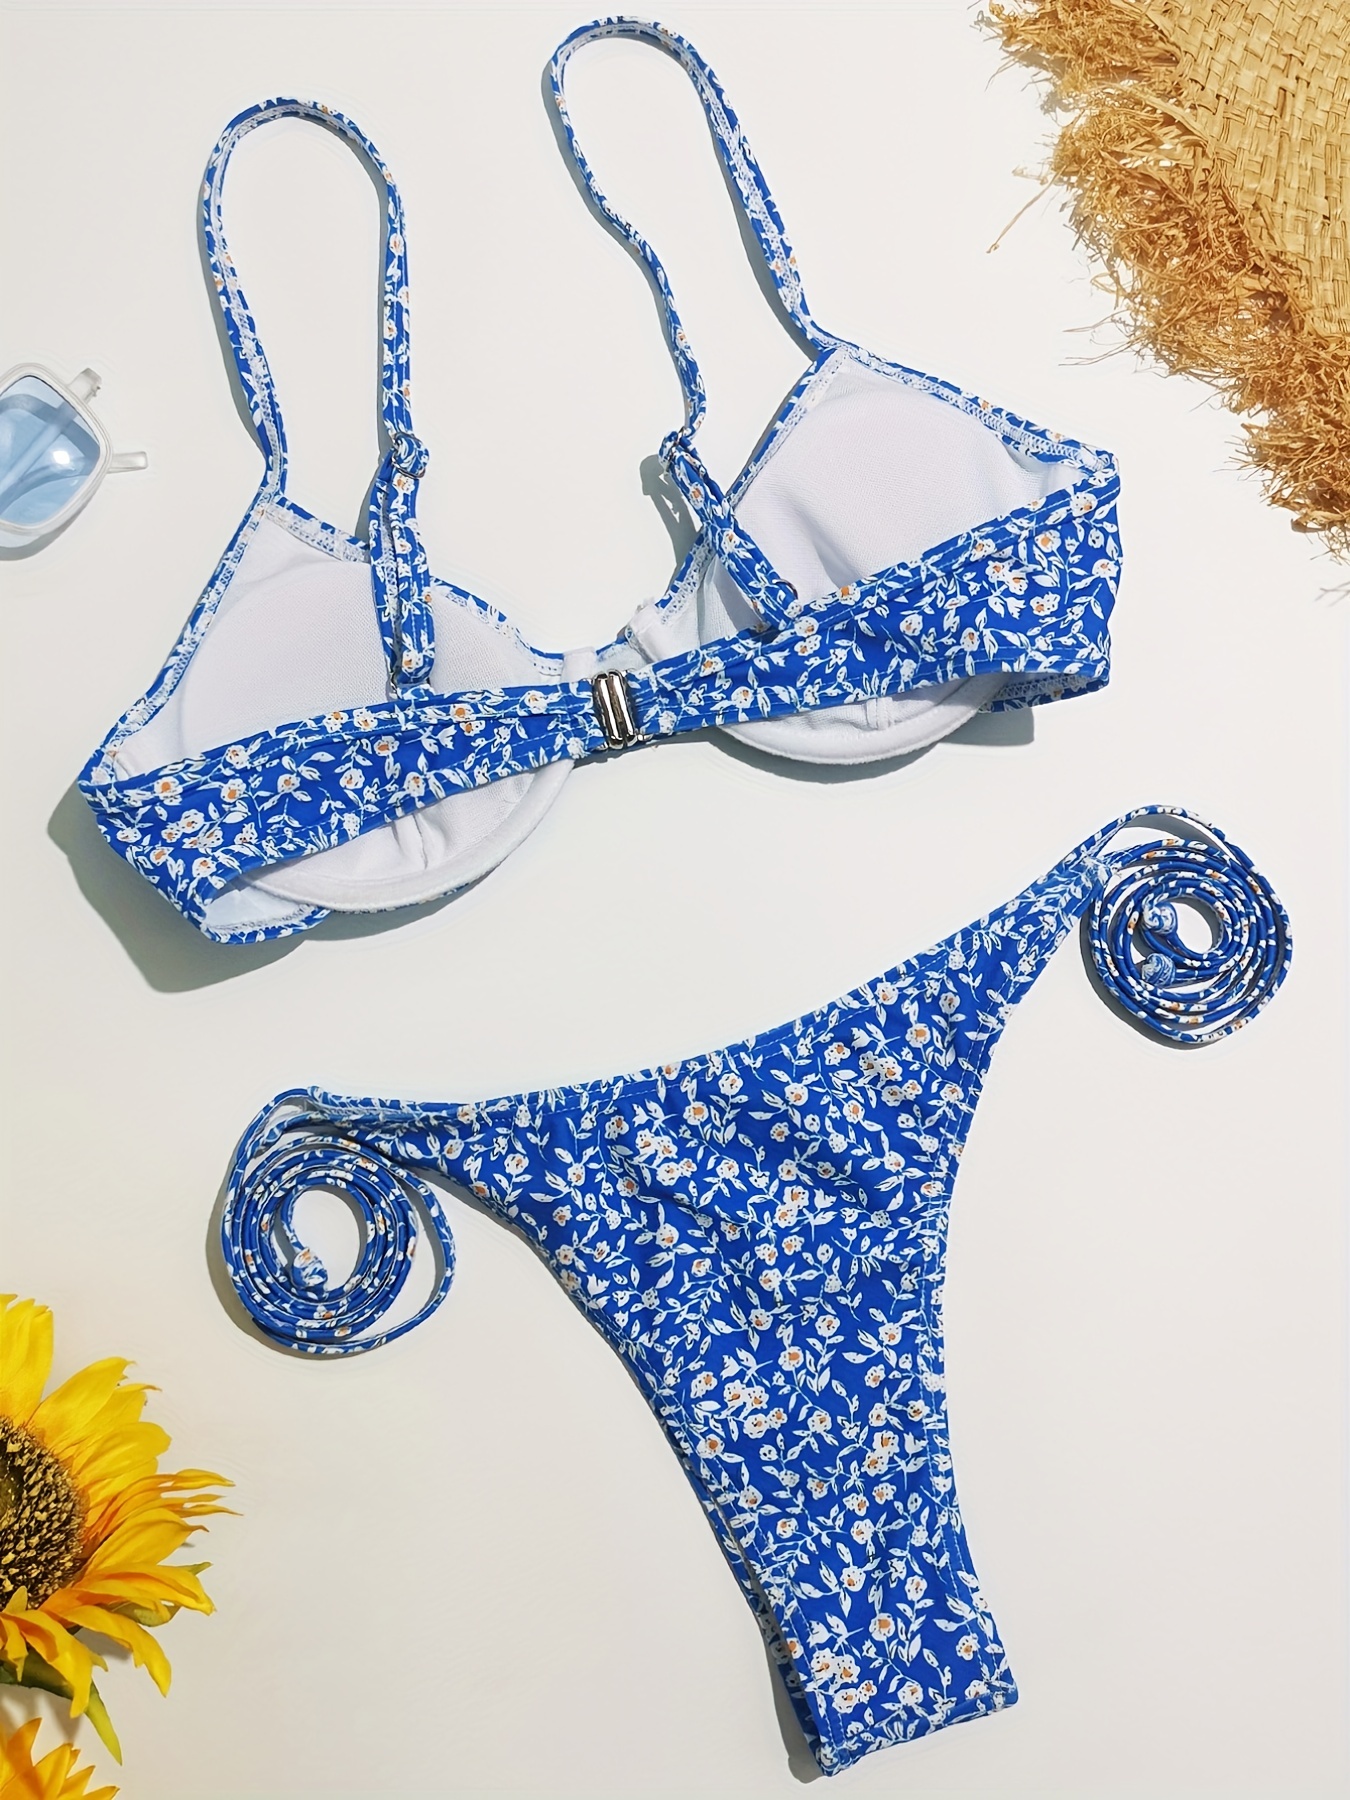 Women's High Waisted Bikini Set Swimsuit Floral Print Self Tied